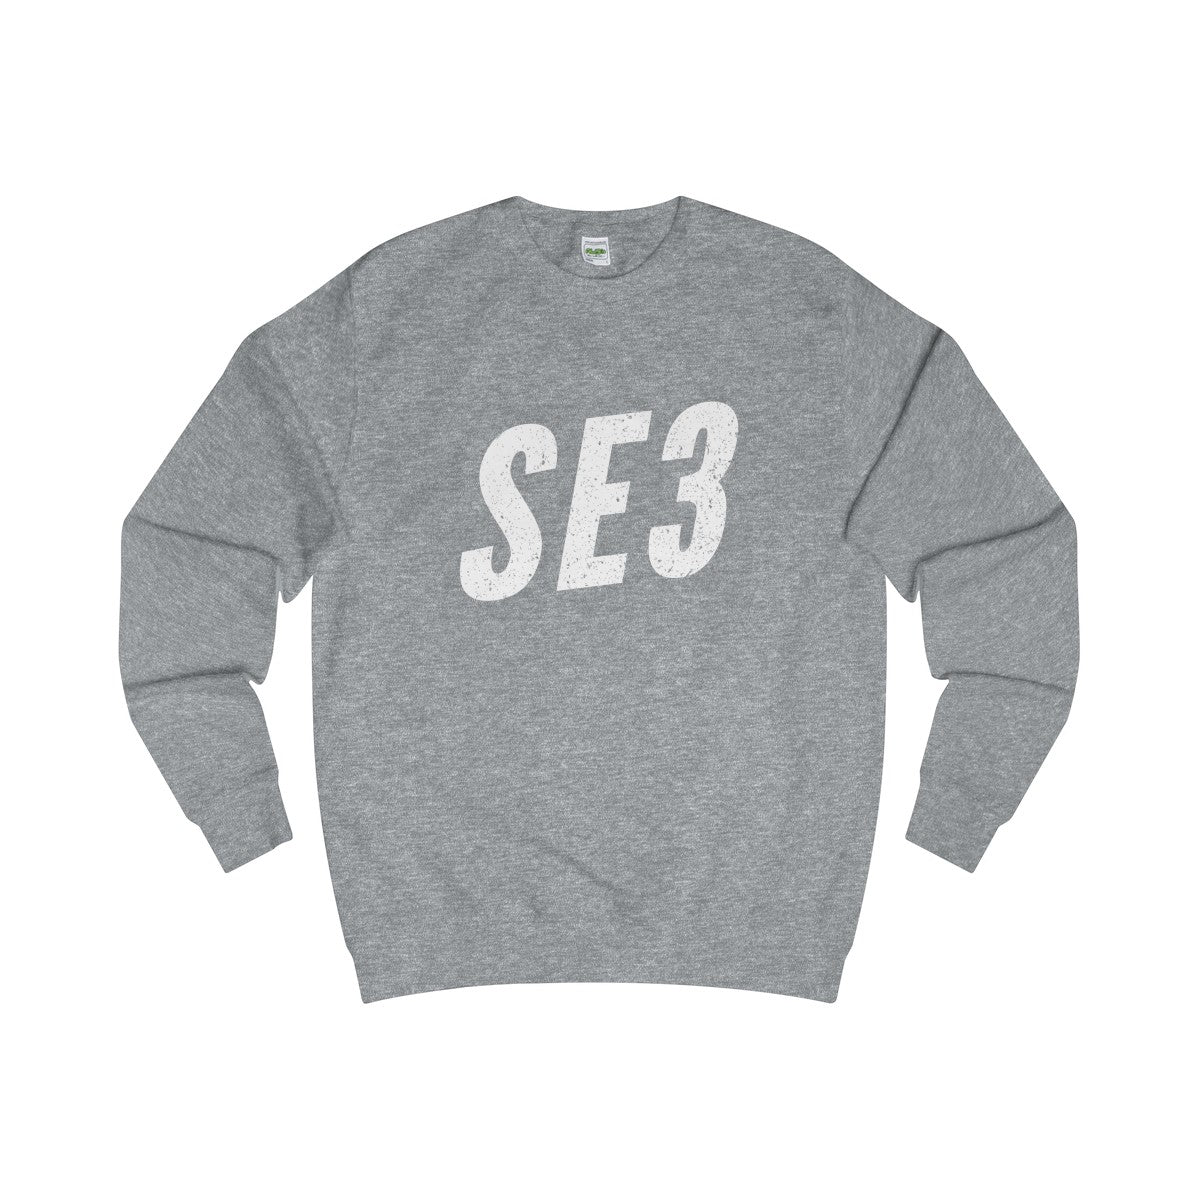 Blackheath SE3 Sweater